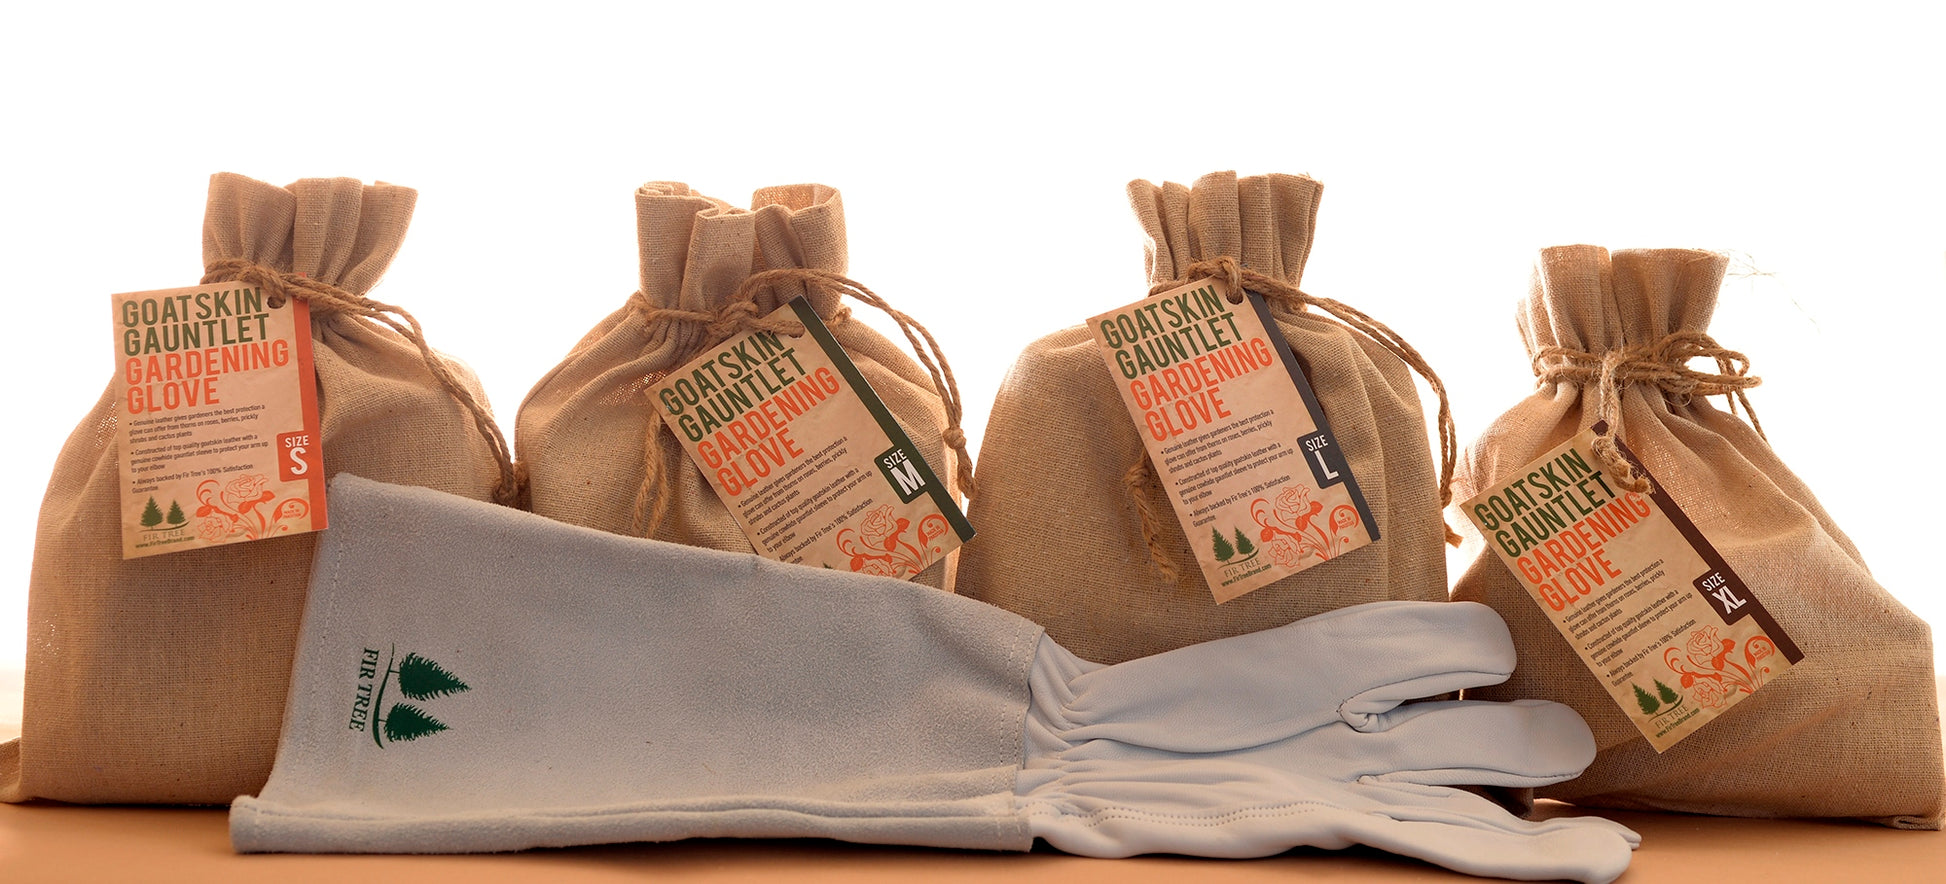 Goatskin Gardening Gloves Gloves Packaged for Gift Giving and Storage Bag